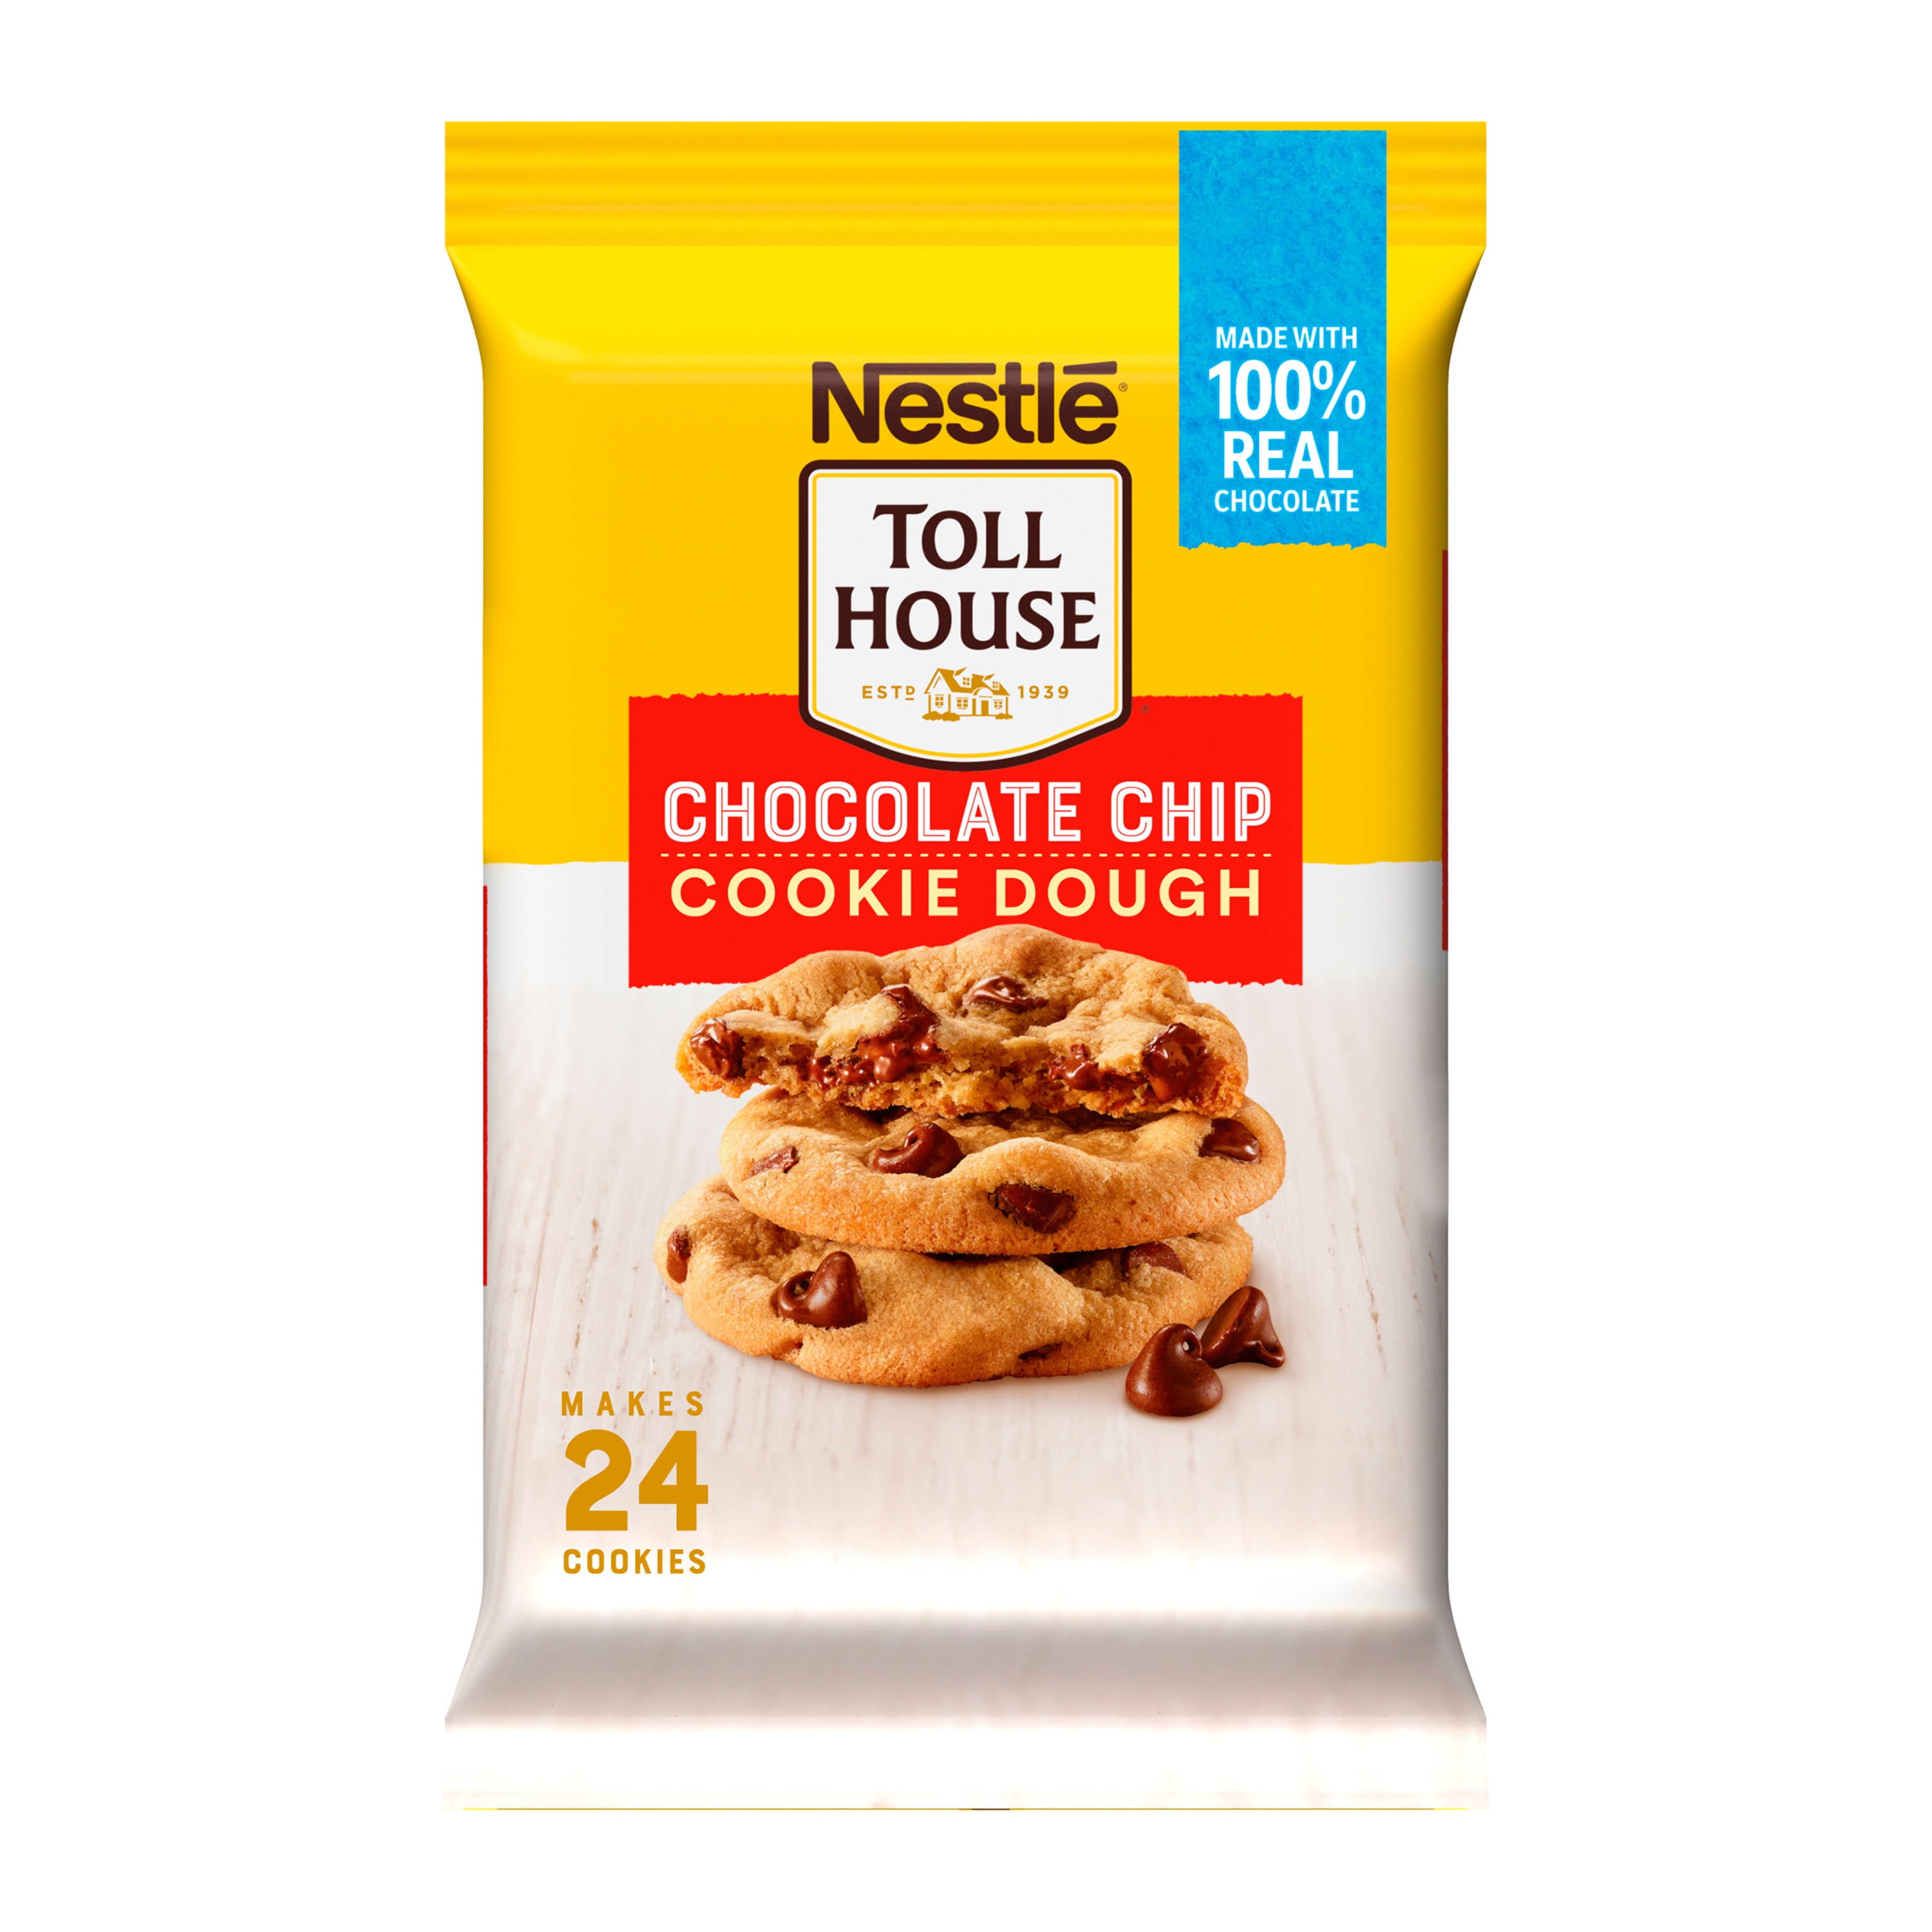 Original NESTLÉ® TOLL HOUSE® Chocolate Chip Cookie Recipe